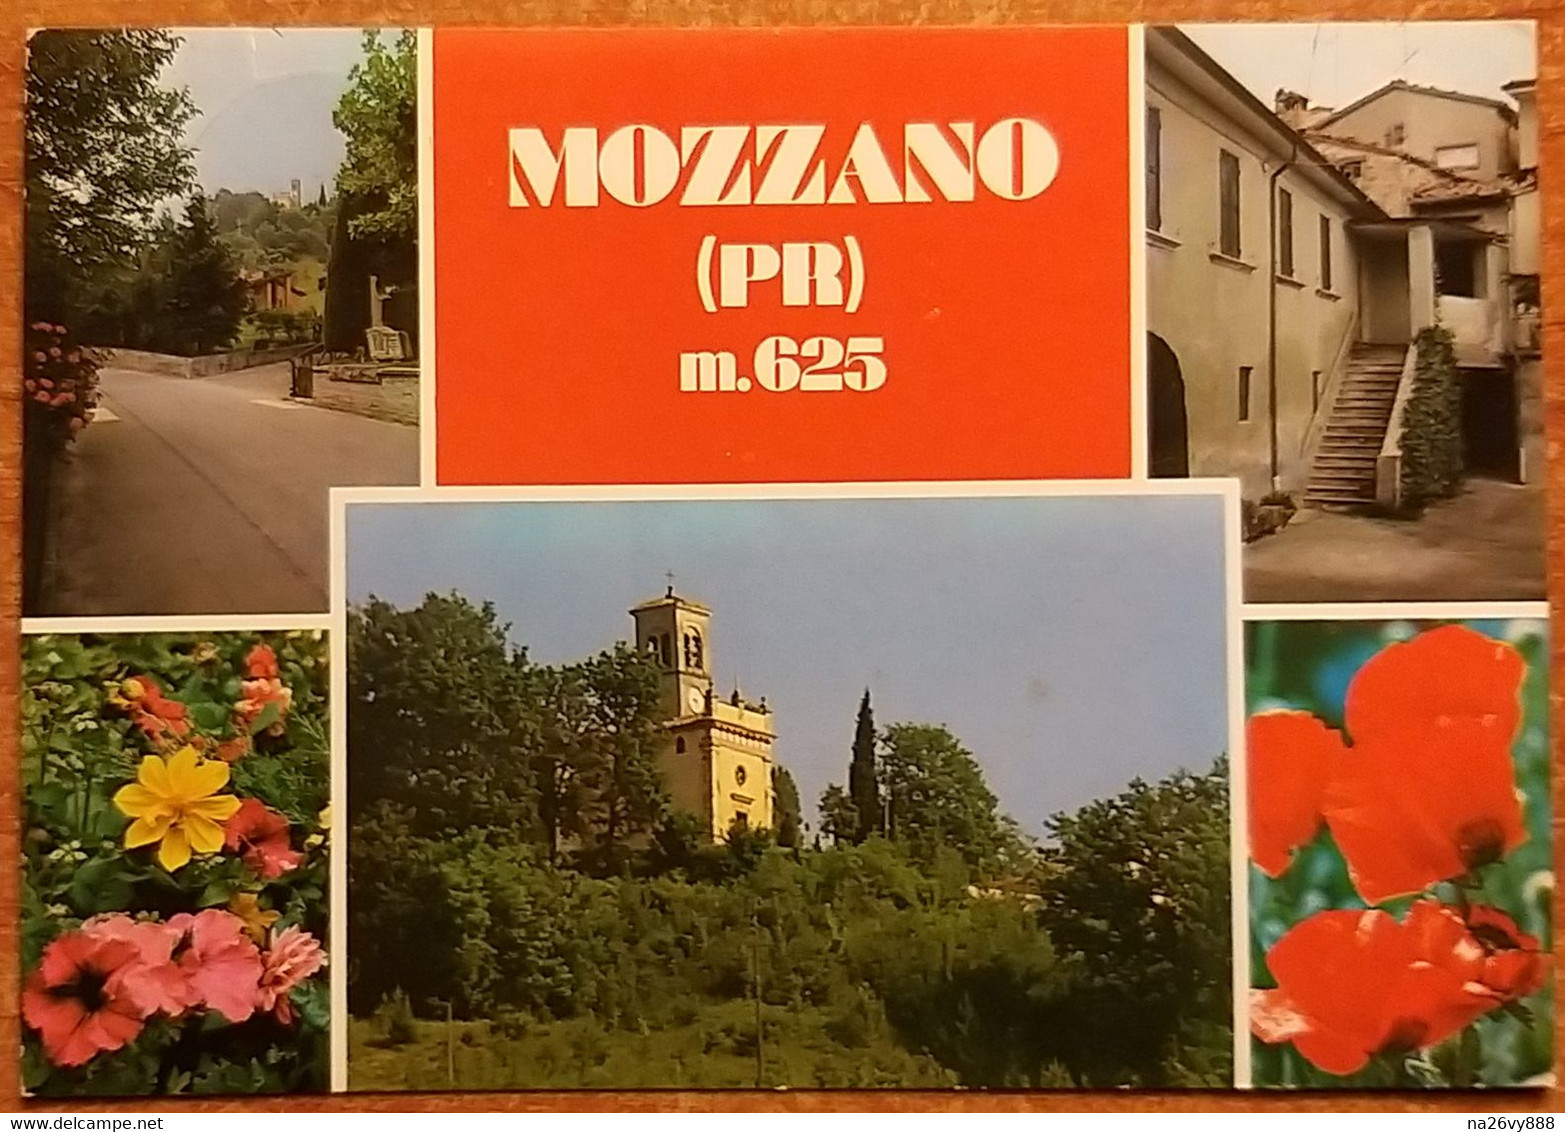 Mozzano (Parma). Vedutine. - Parma